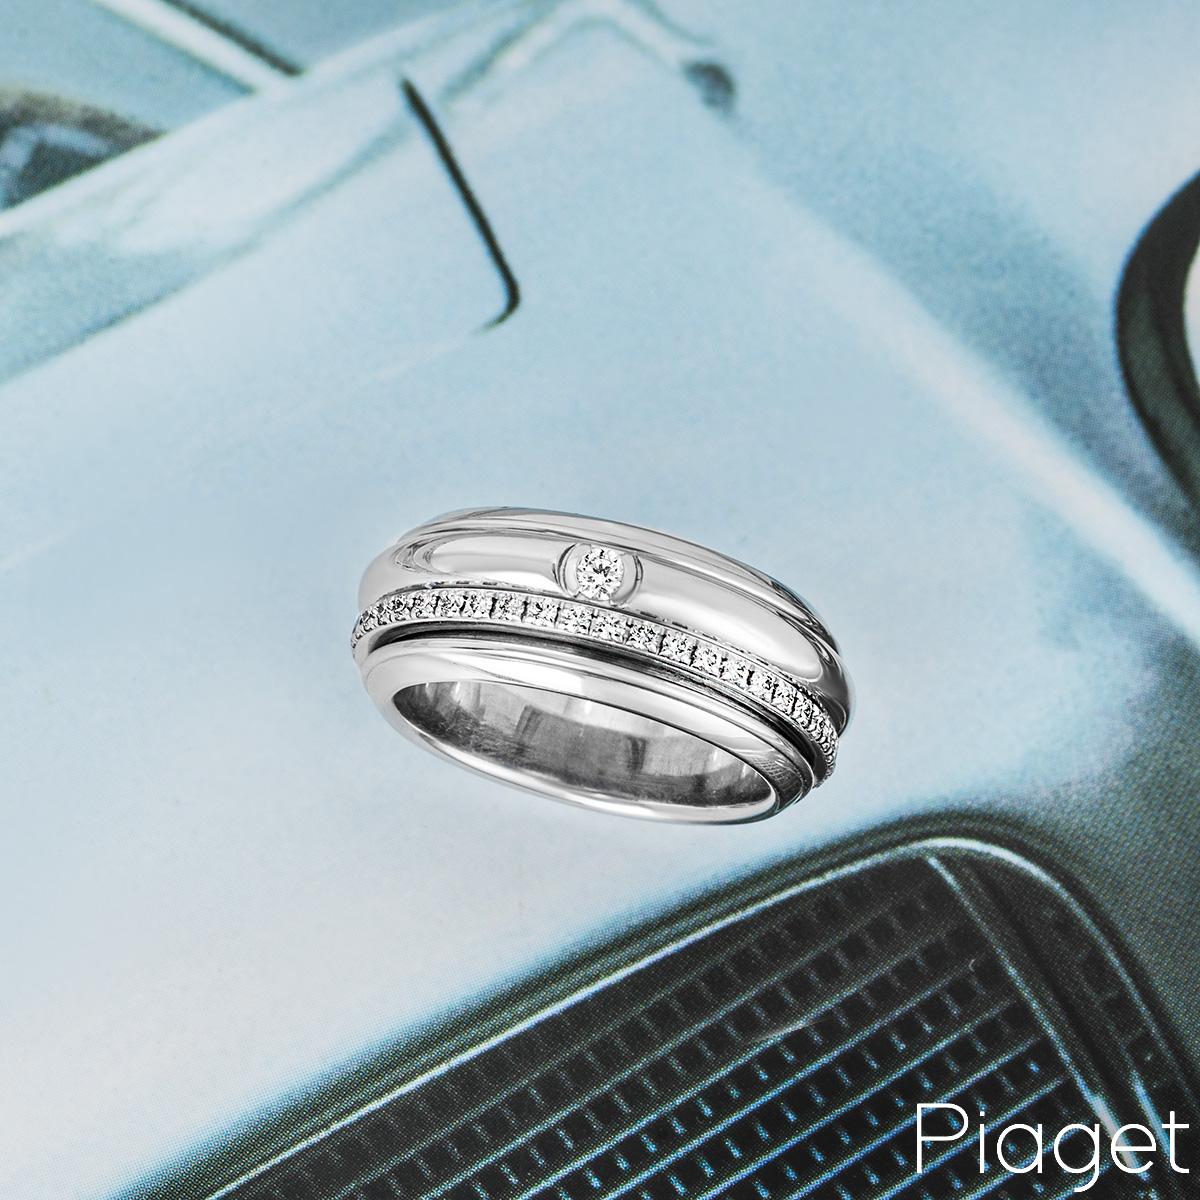 Piaget White Gold Diamond Possession Ring 2